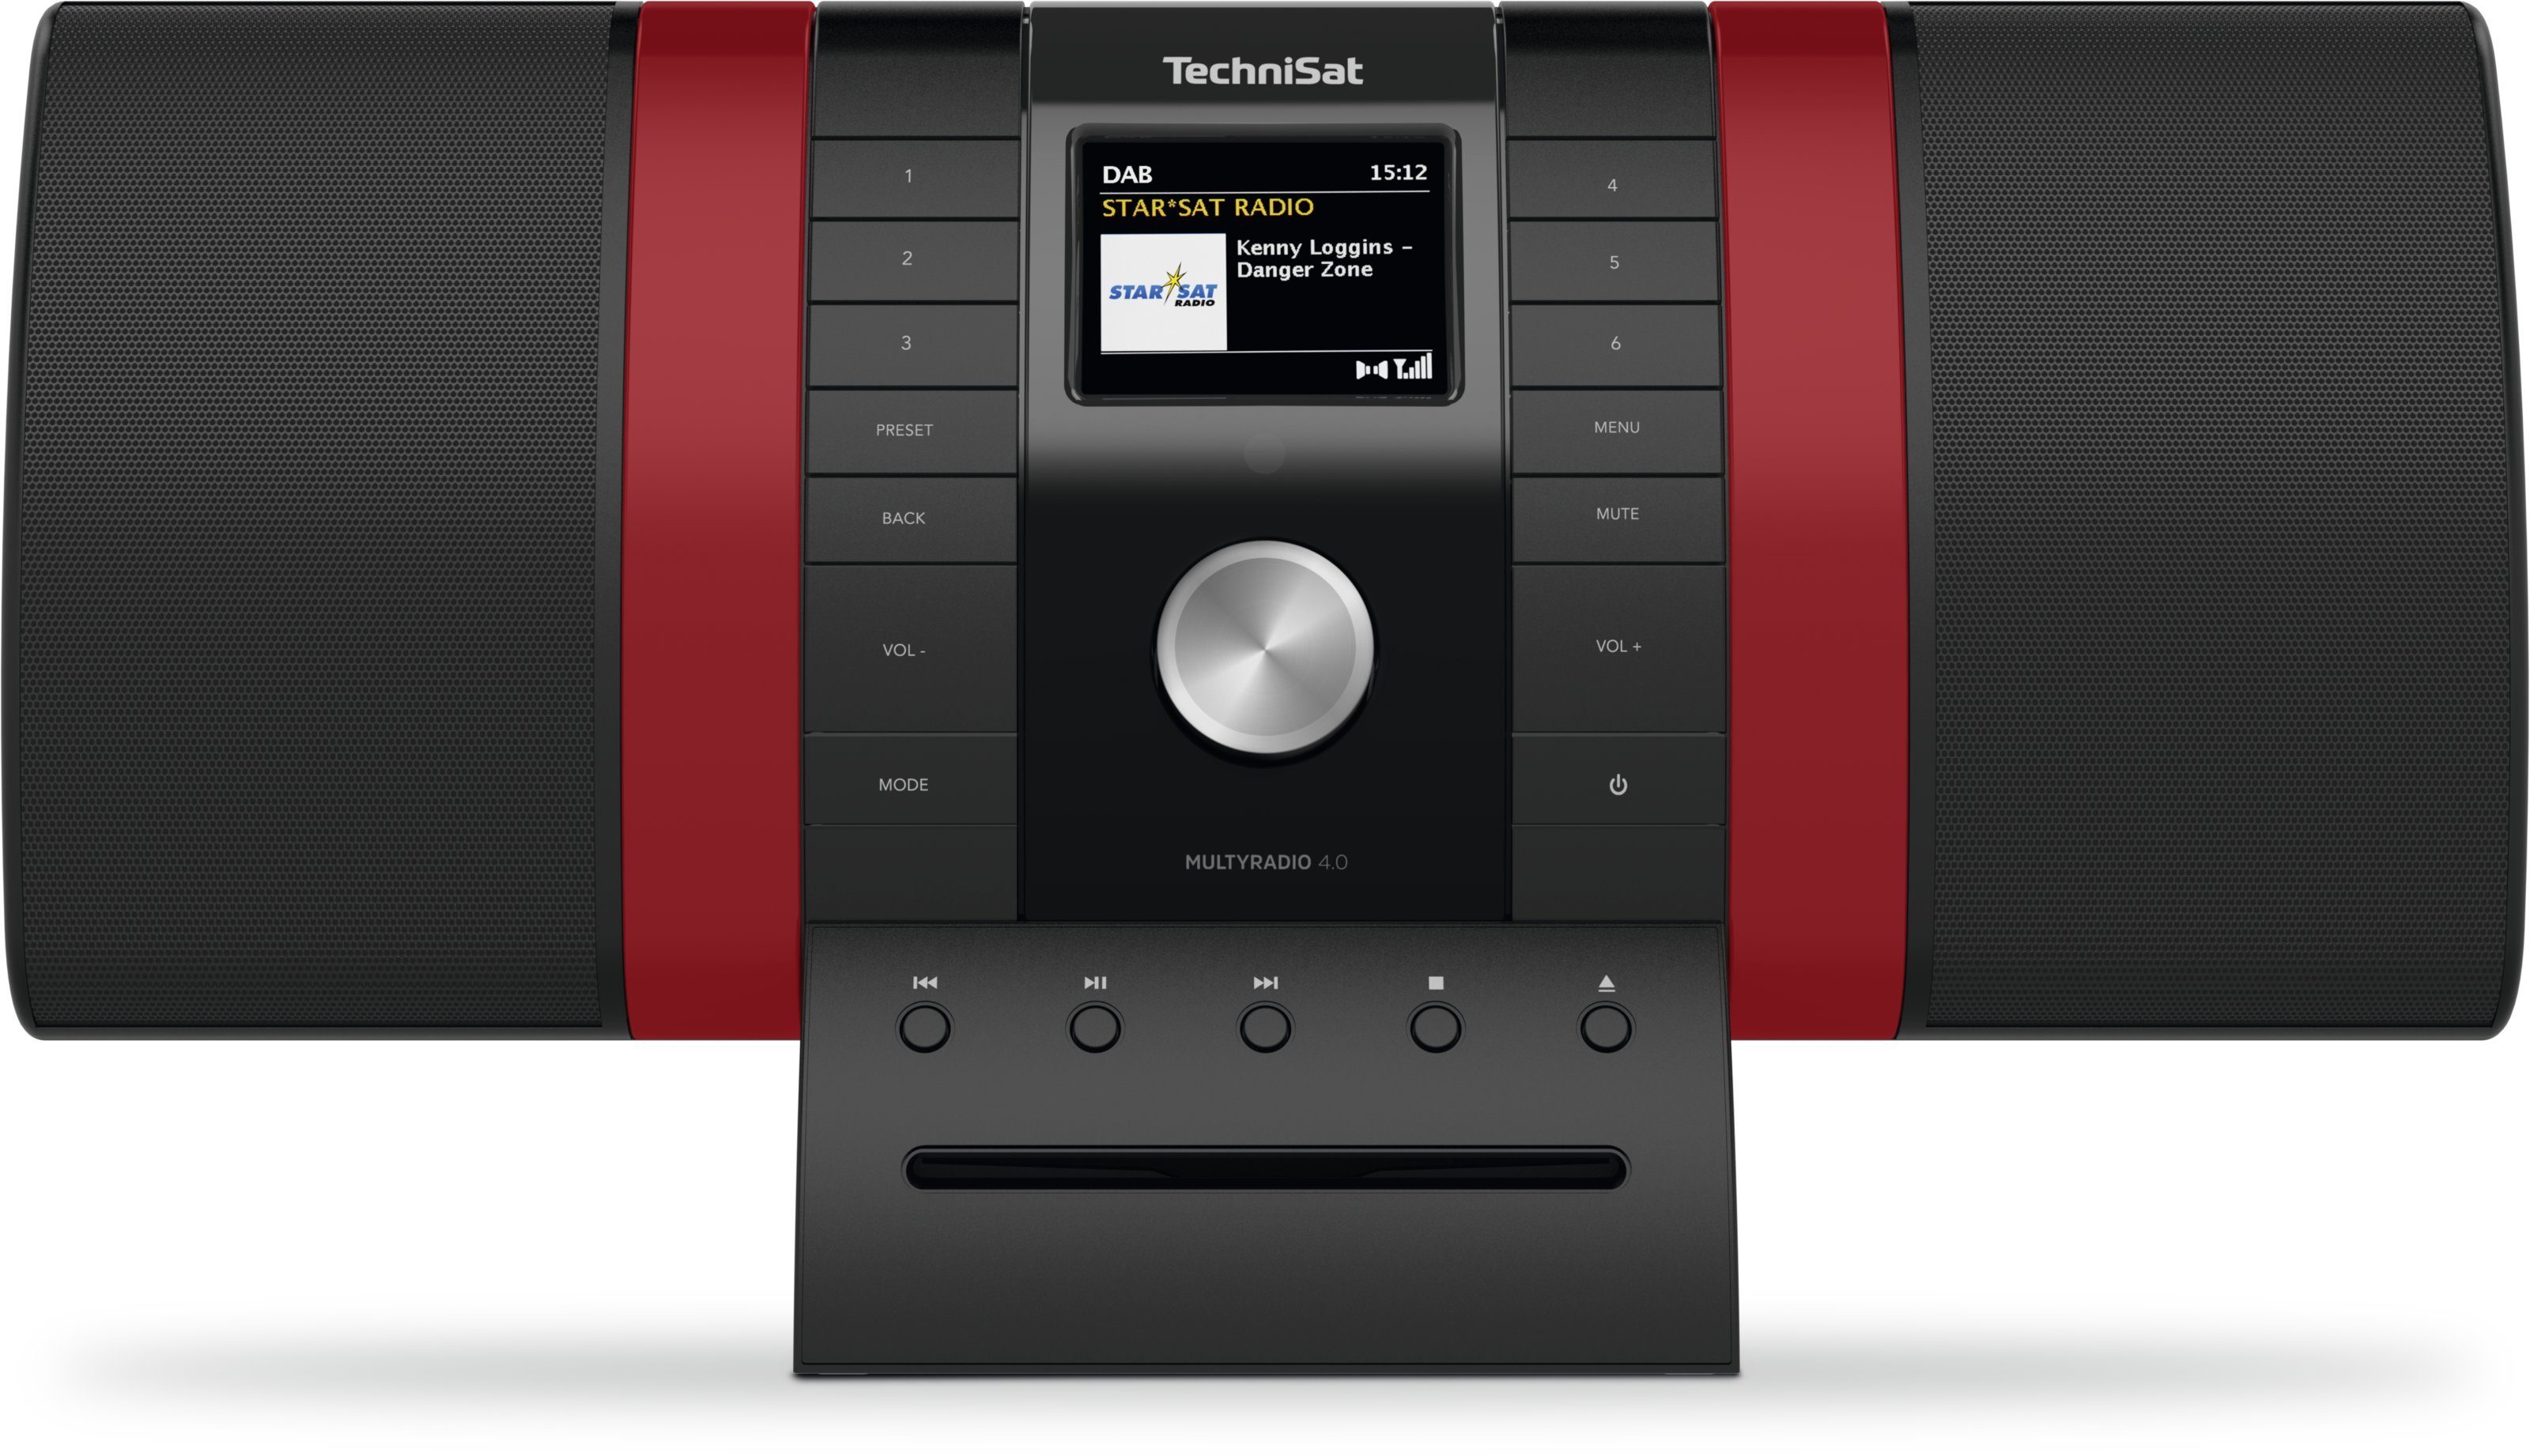 TechniSat Sprachsteuerung, W, App-Steuerung) 20,00 Alexa Digitalradio 4.0 MULTYRADIO UKW, (DAB) Amazon (Digitalradio Bluetooth-Audiostreaming, (DAB),